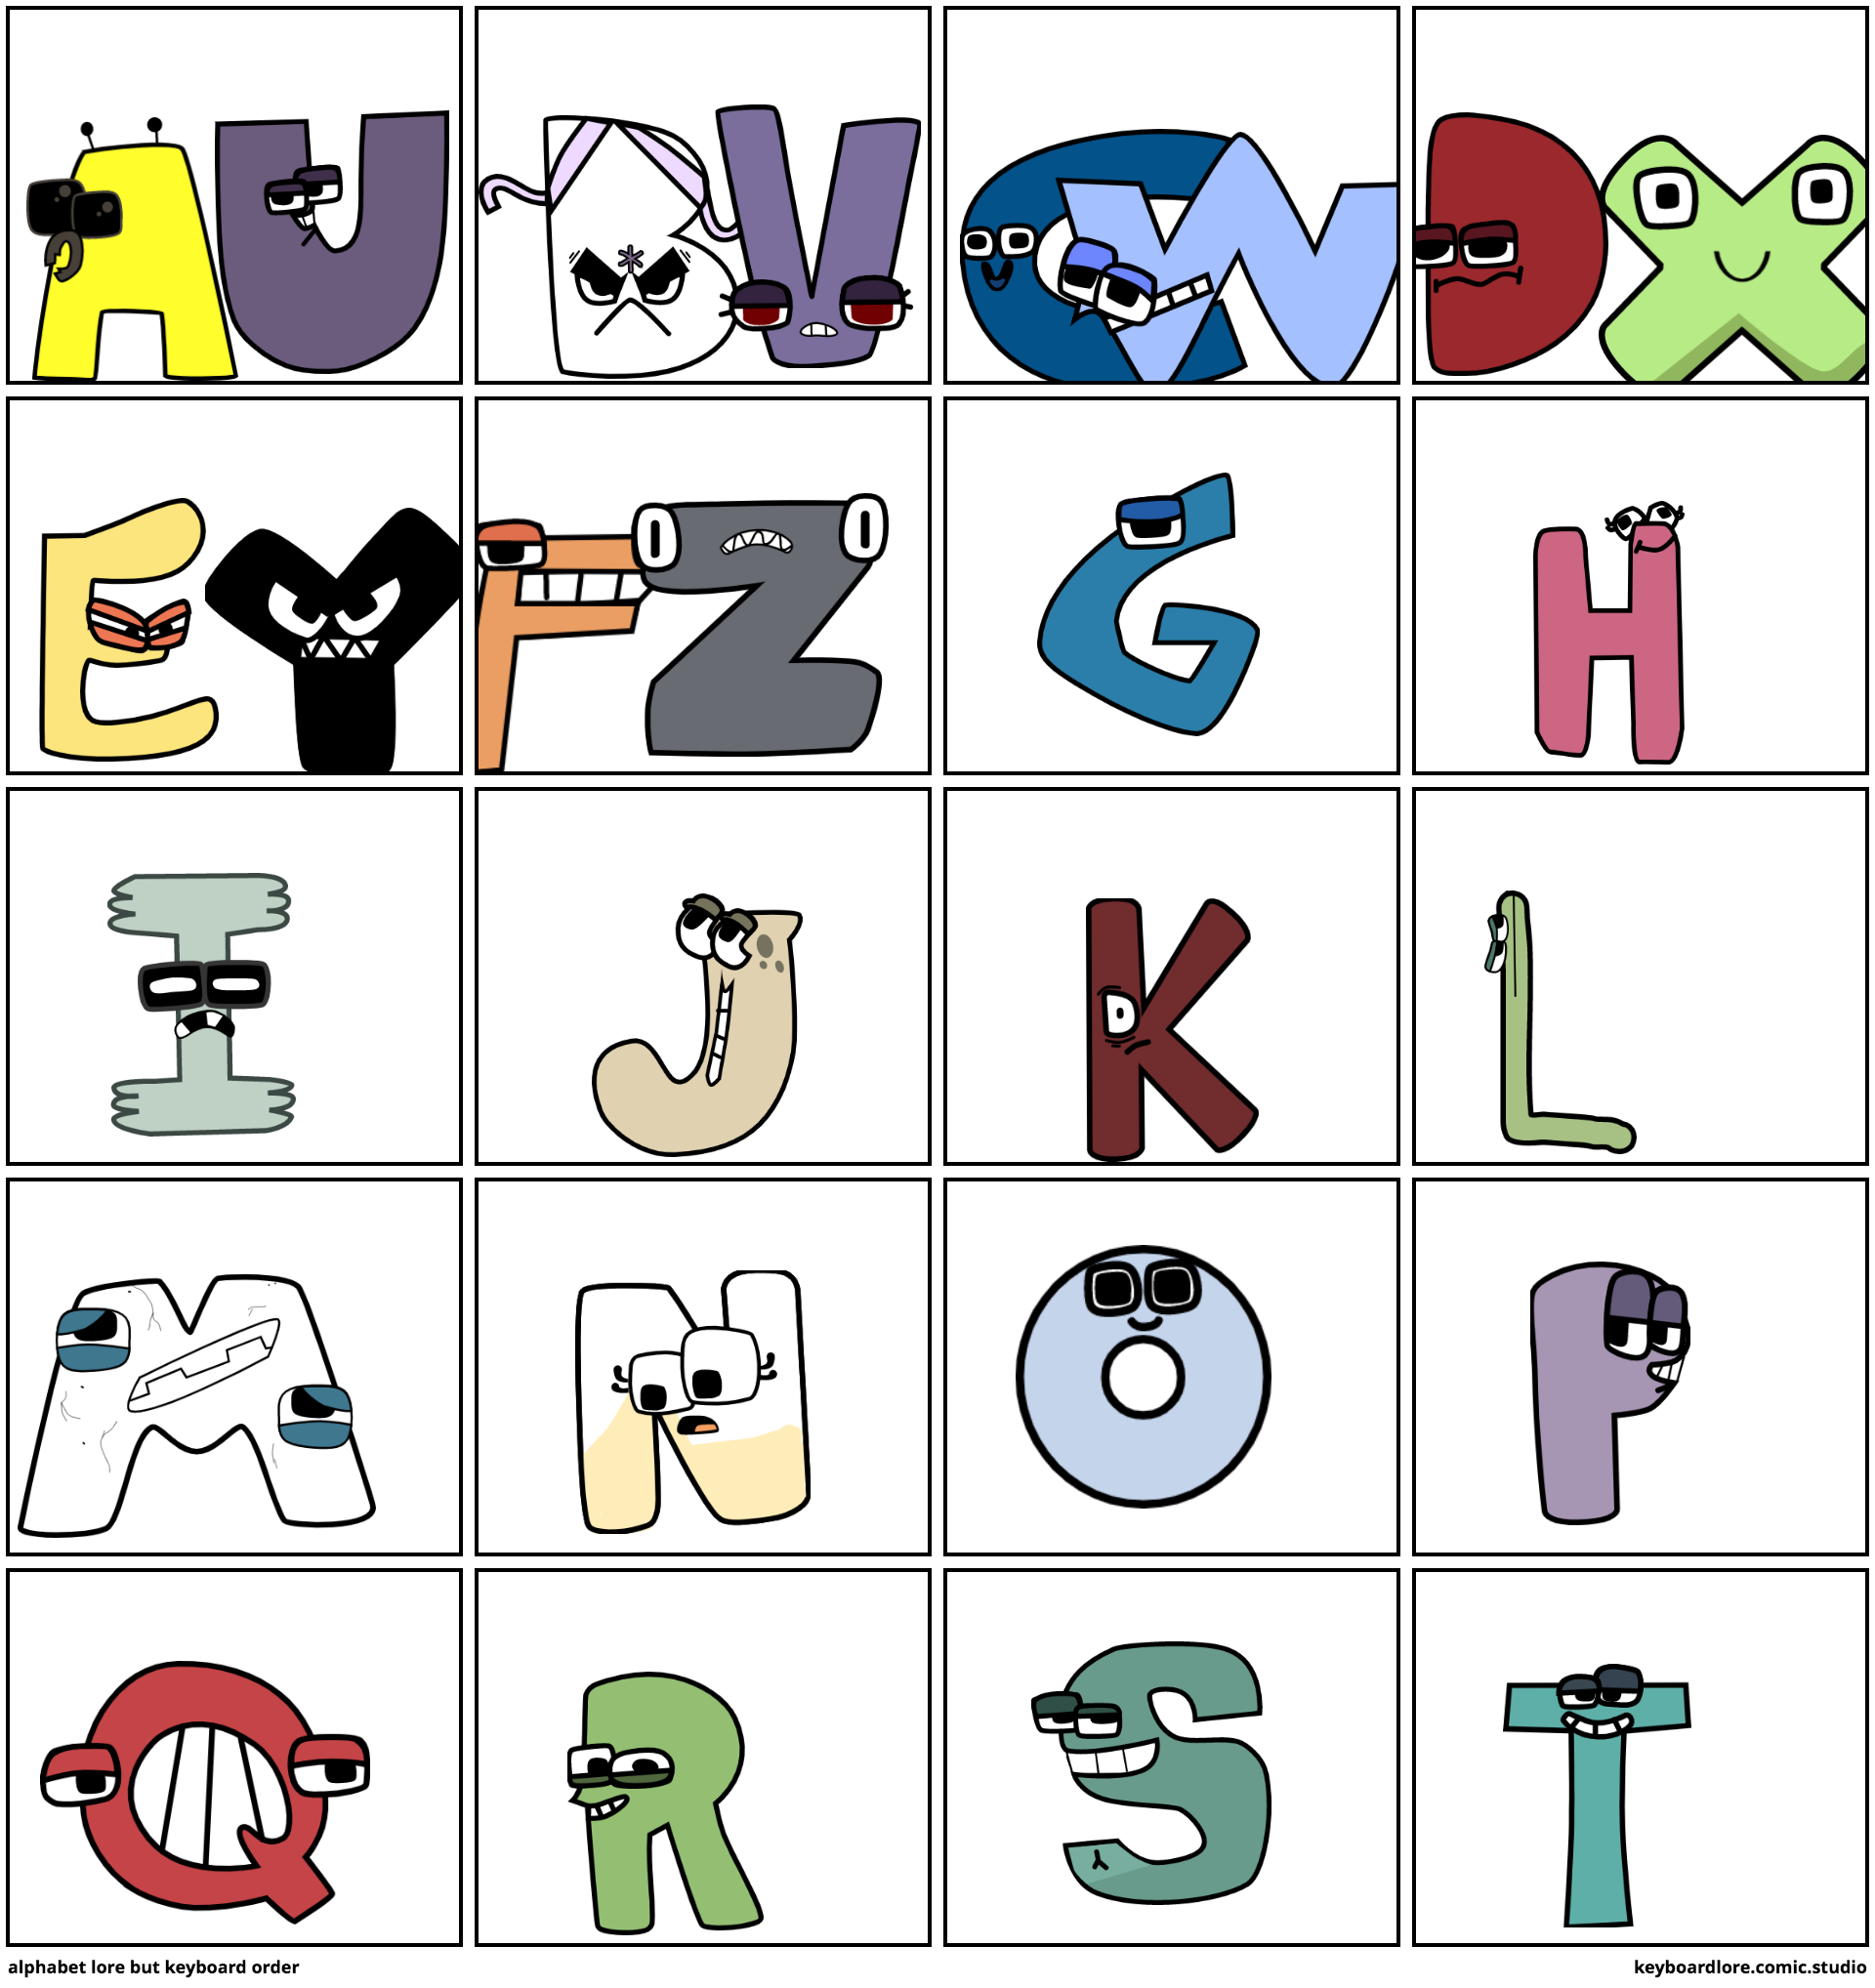 Keyboard alphabet lore W - Comic Studio